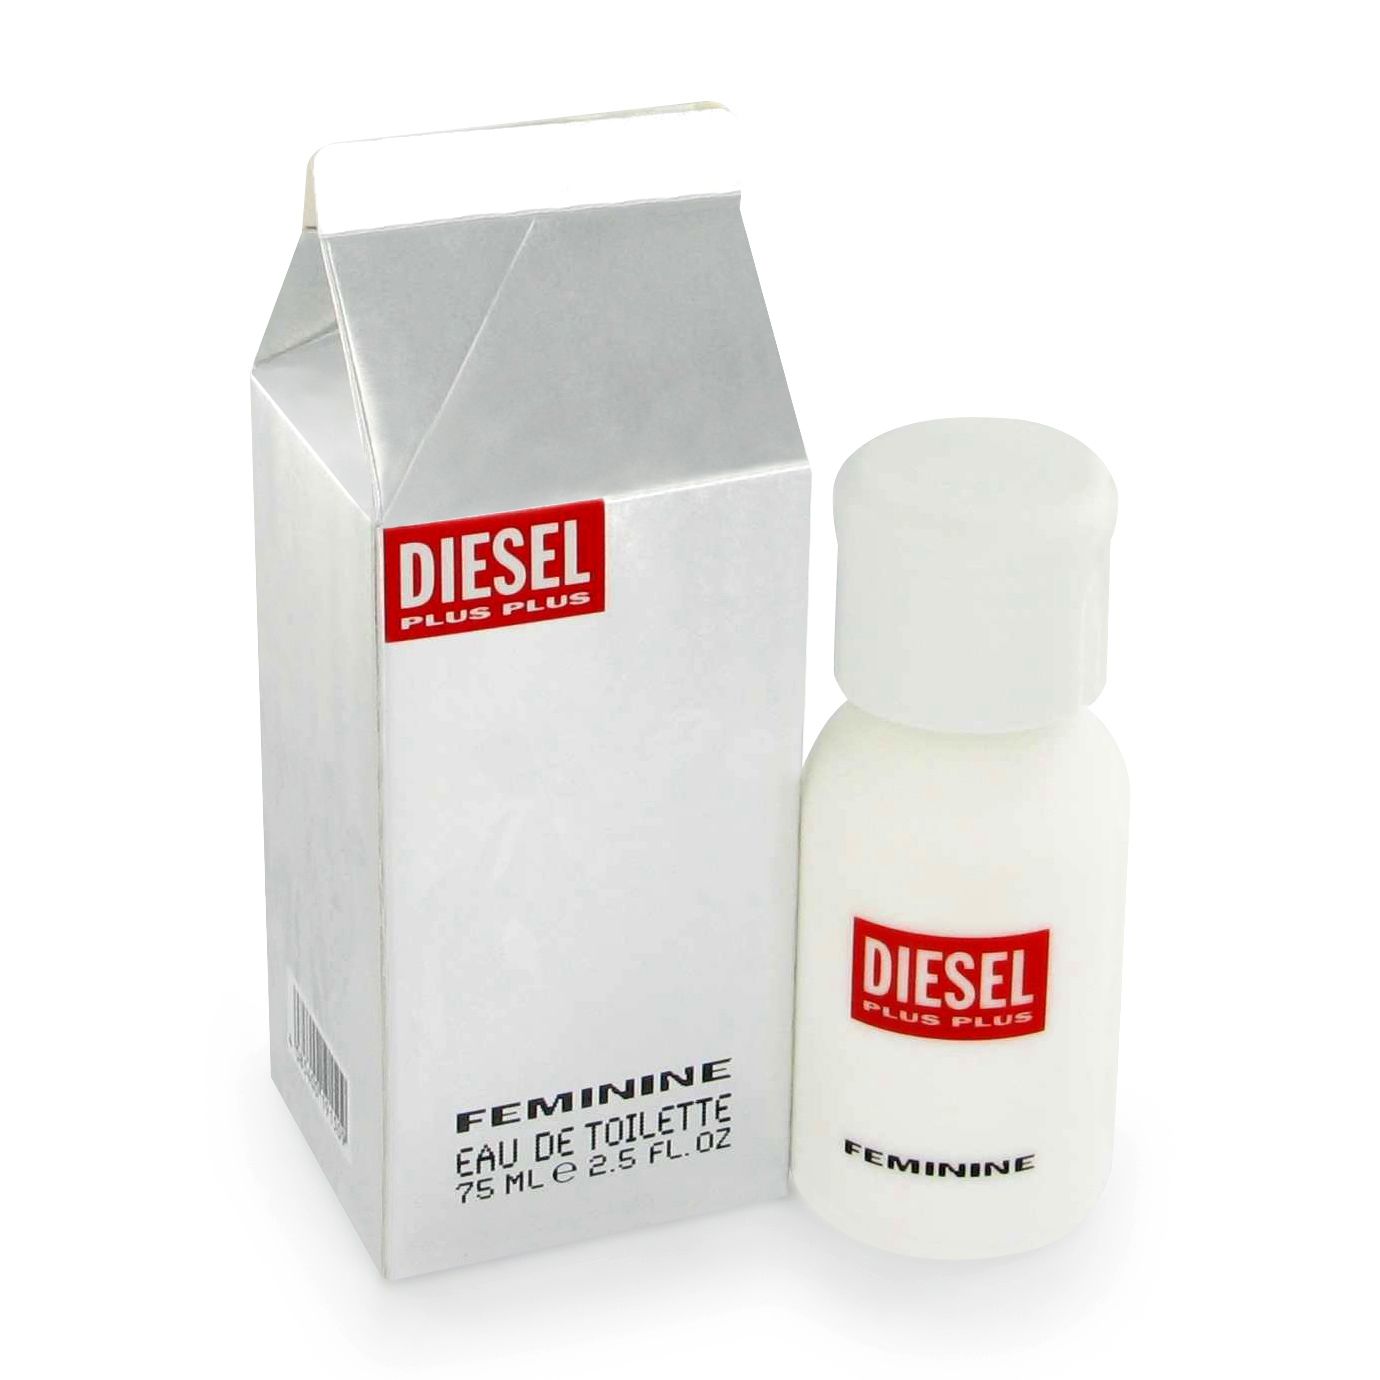 Diesel Plus Plus Feminine Perfume 2 5 oz EDT 400914704504